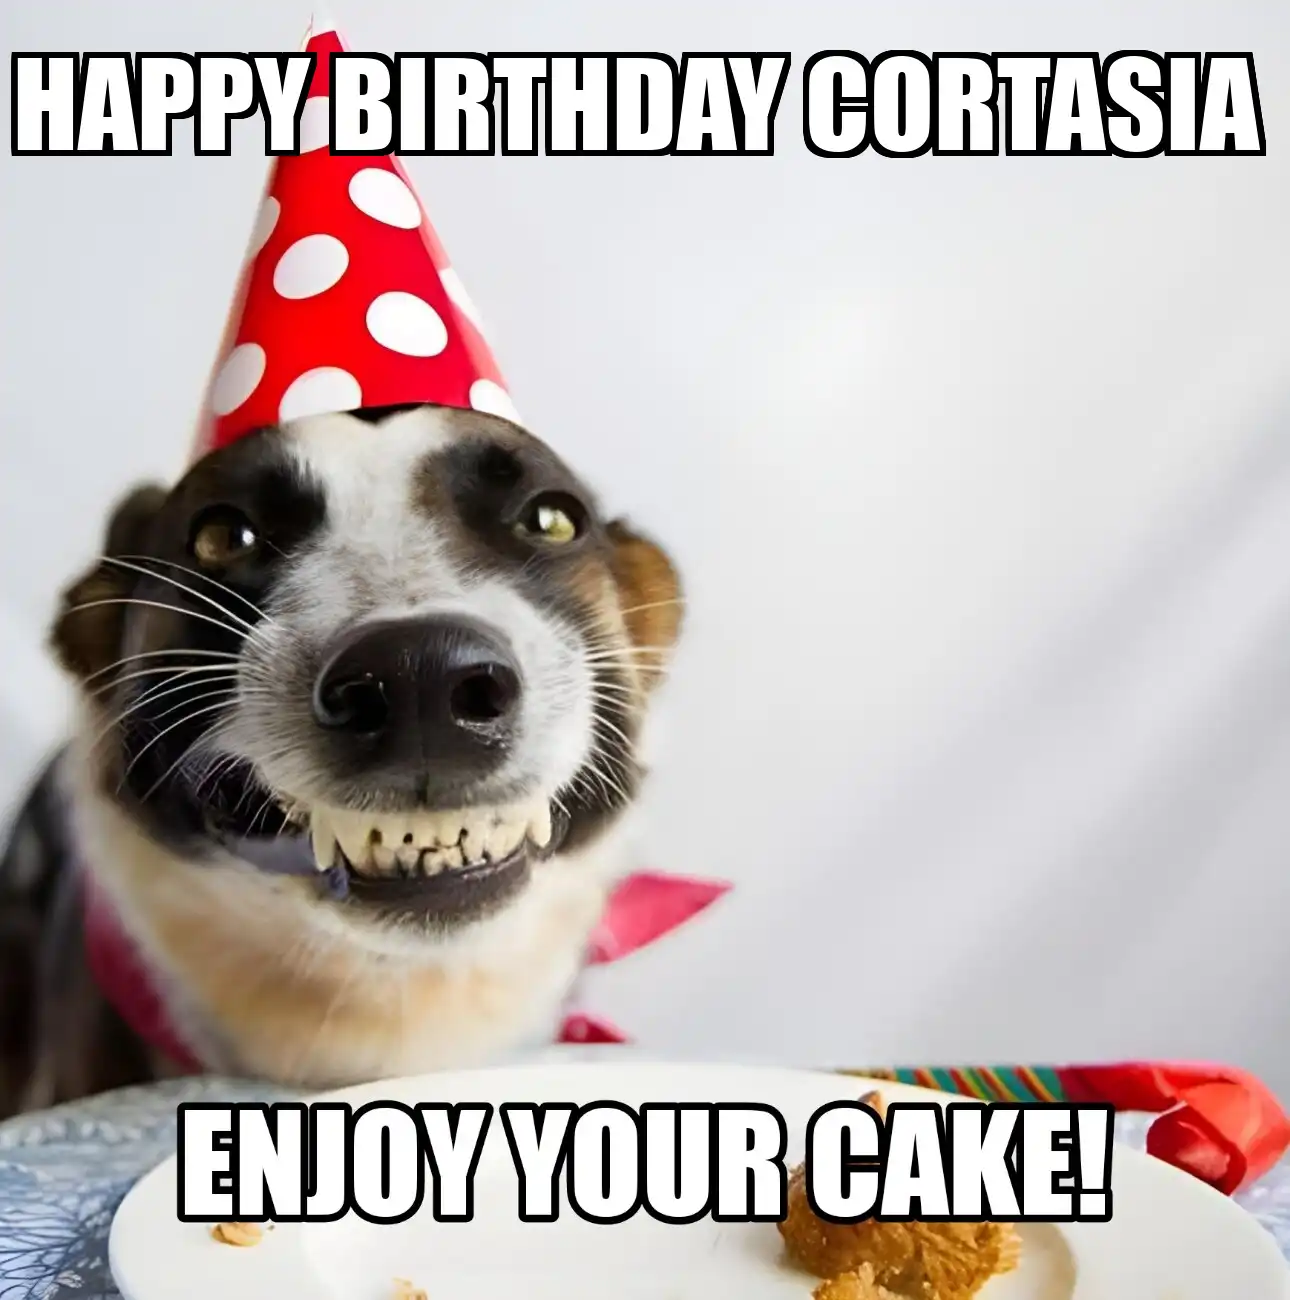 Happy Birthday Cortasia Enjoy Your Cake Dog Meme